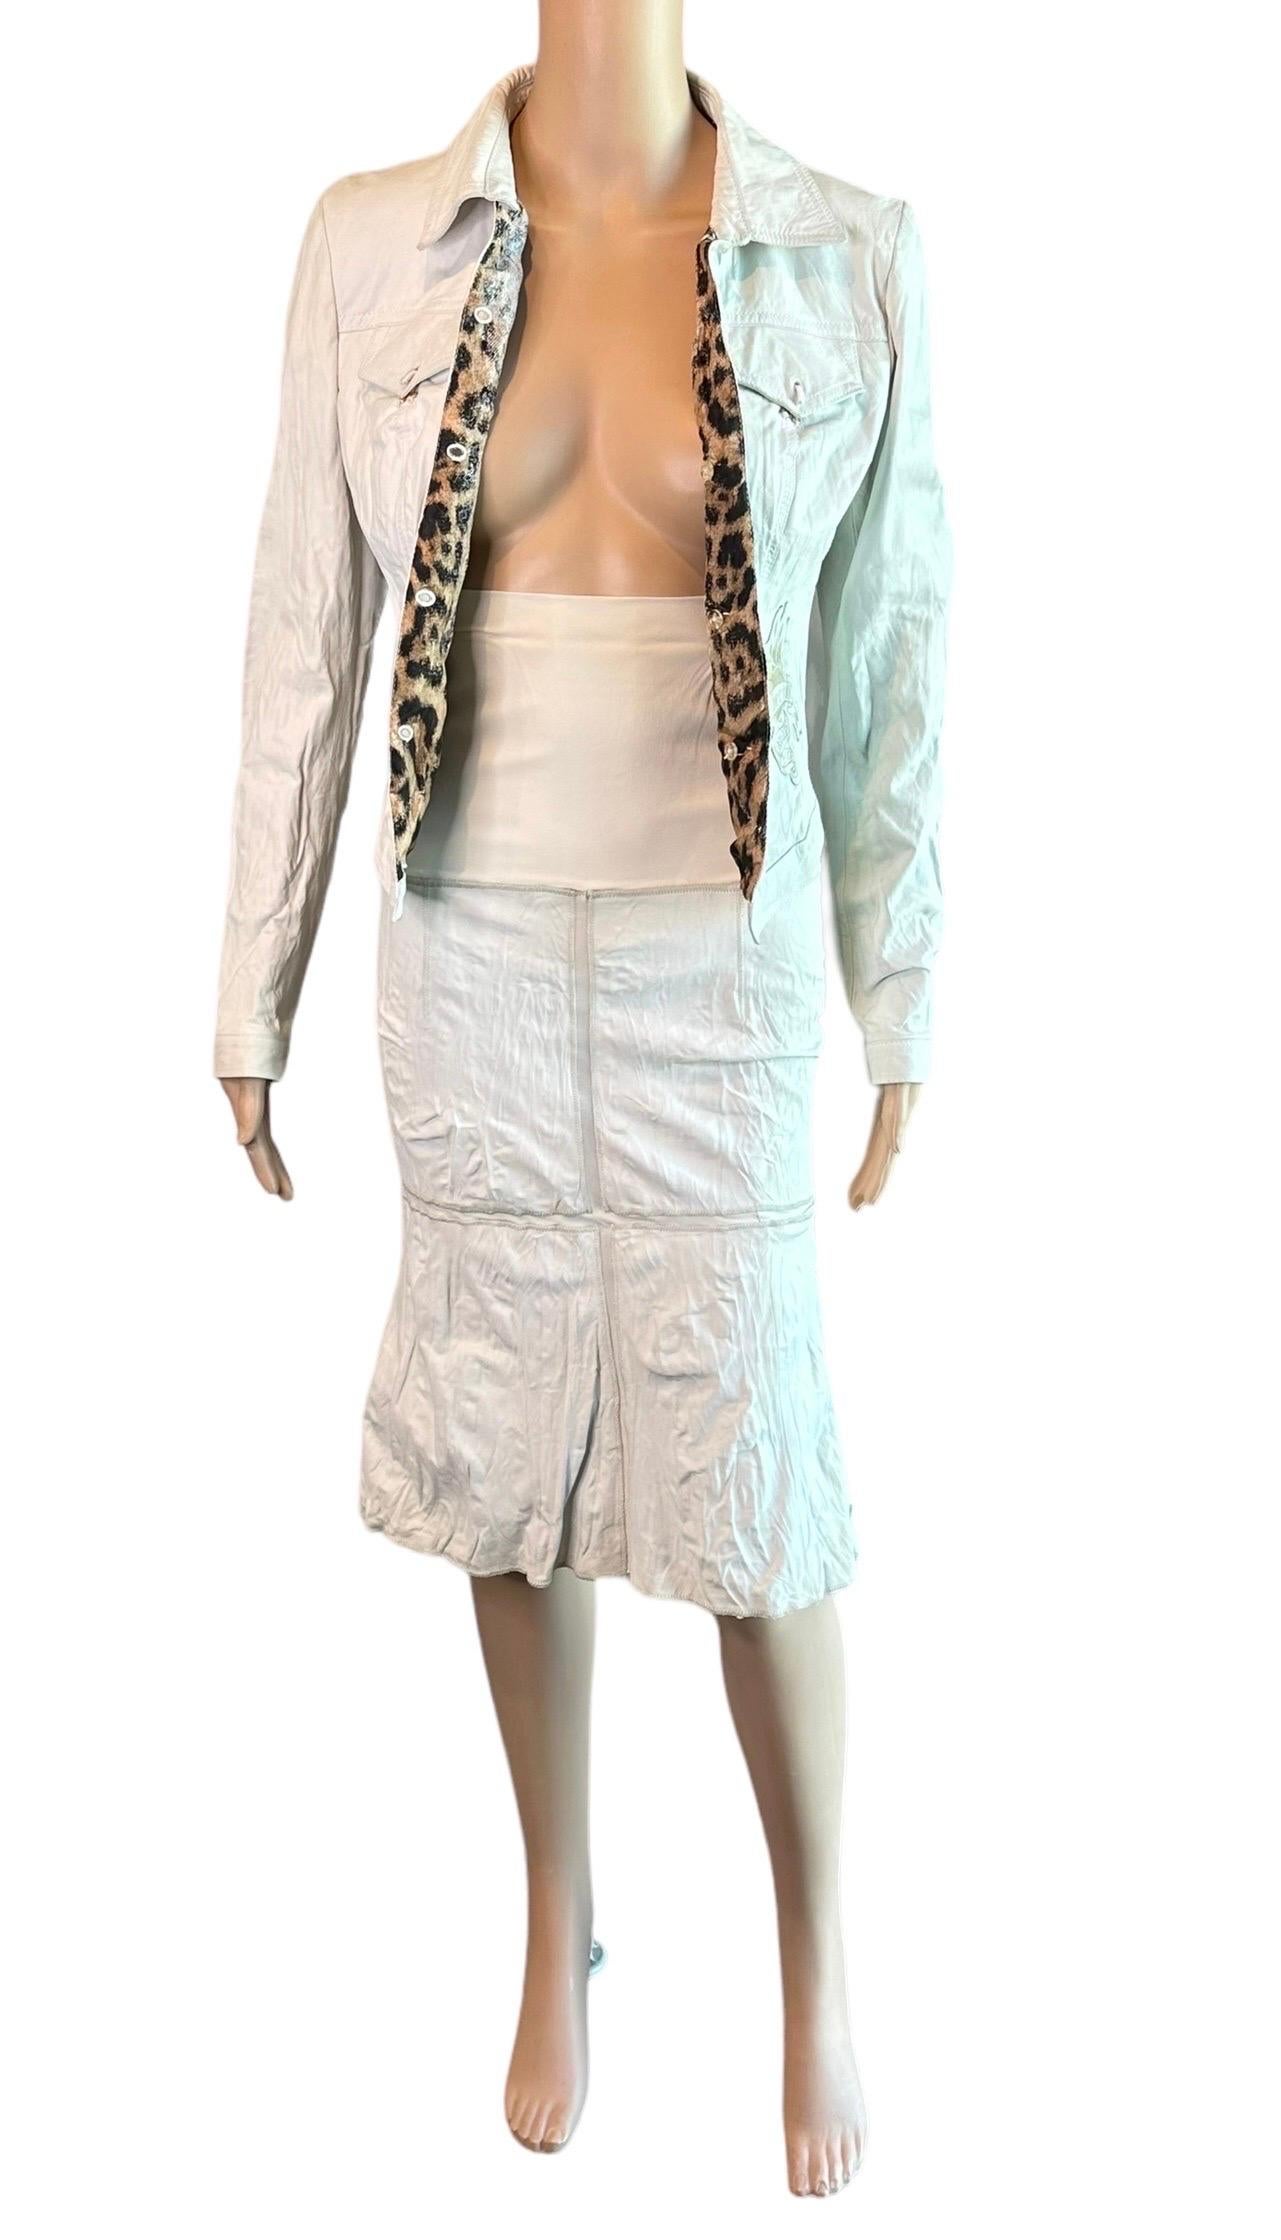 Roberto Cavalli S/S 2003 Unworn Leather Jacket Coat & Skirt 2 Piece Set Ensemble For Sale 6